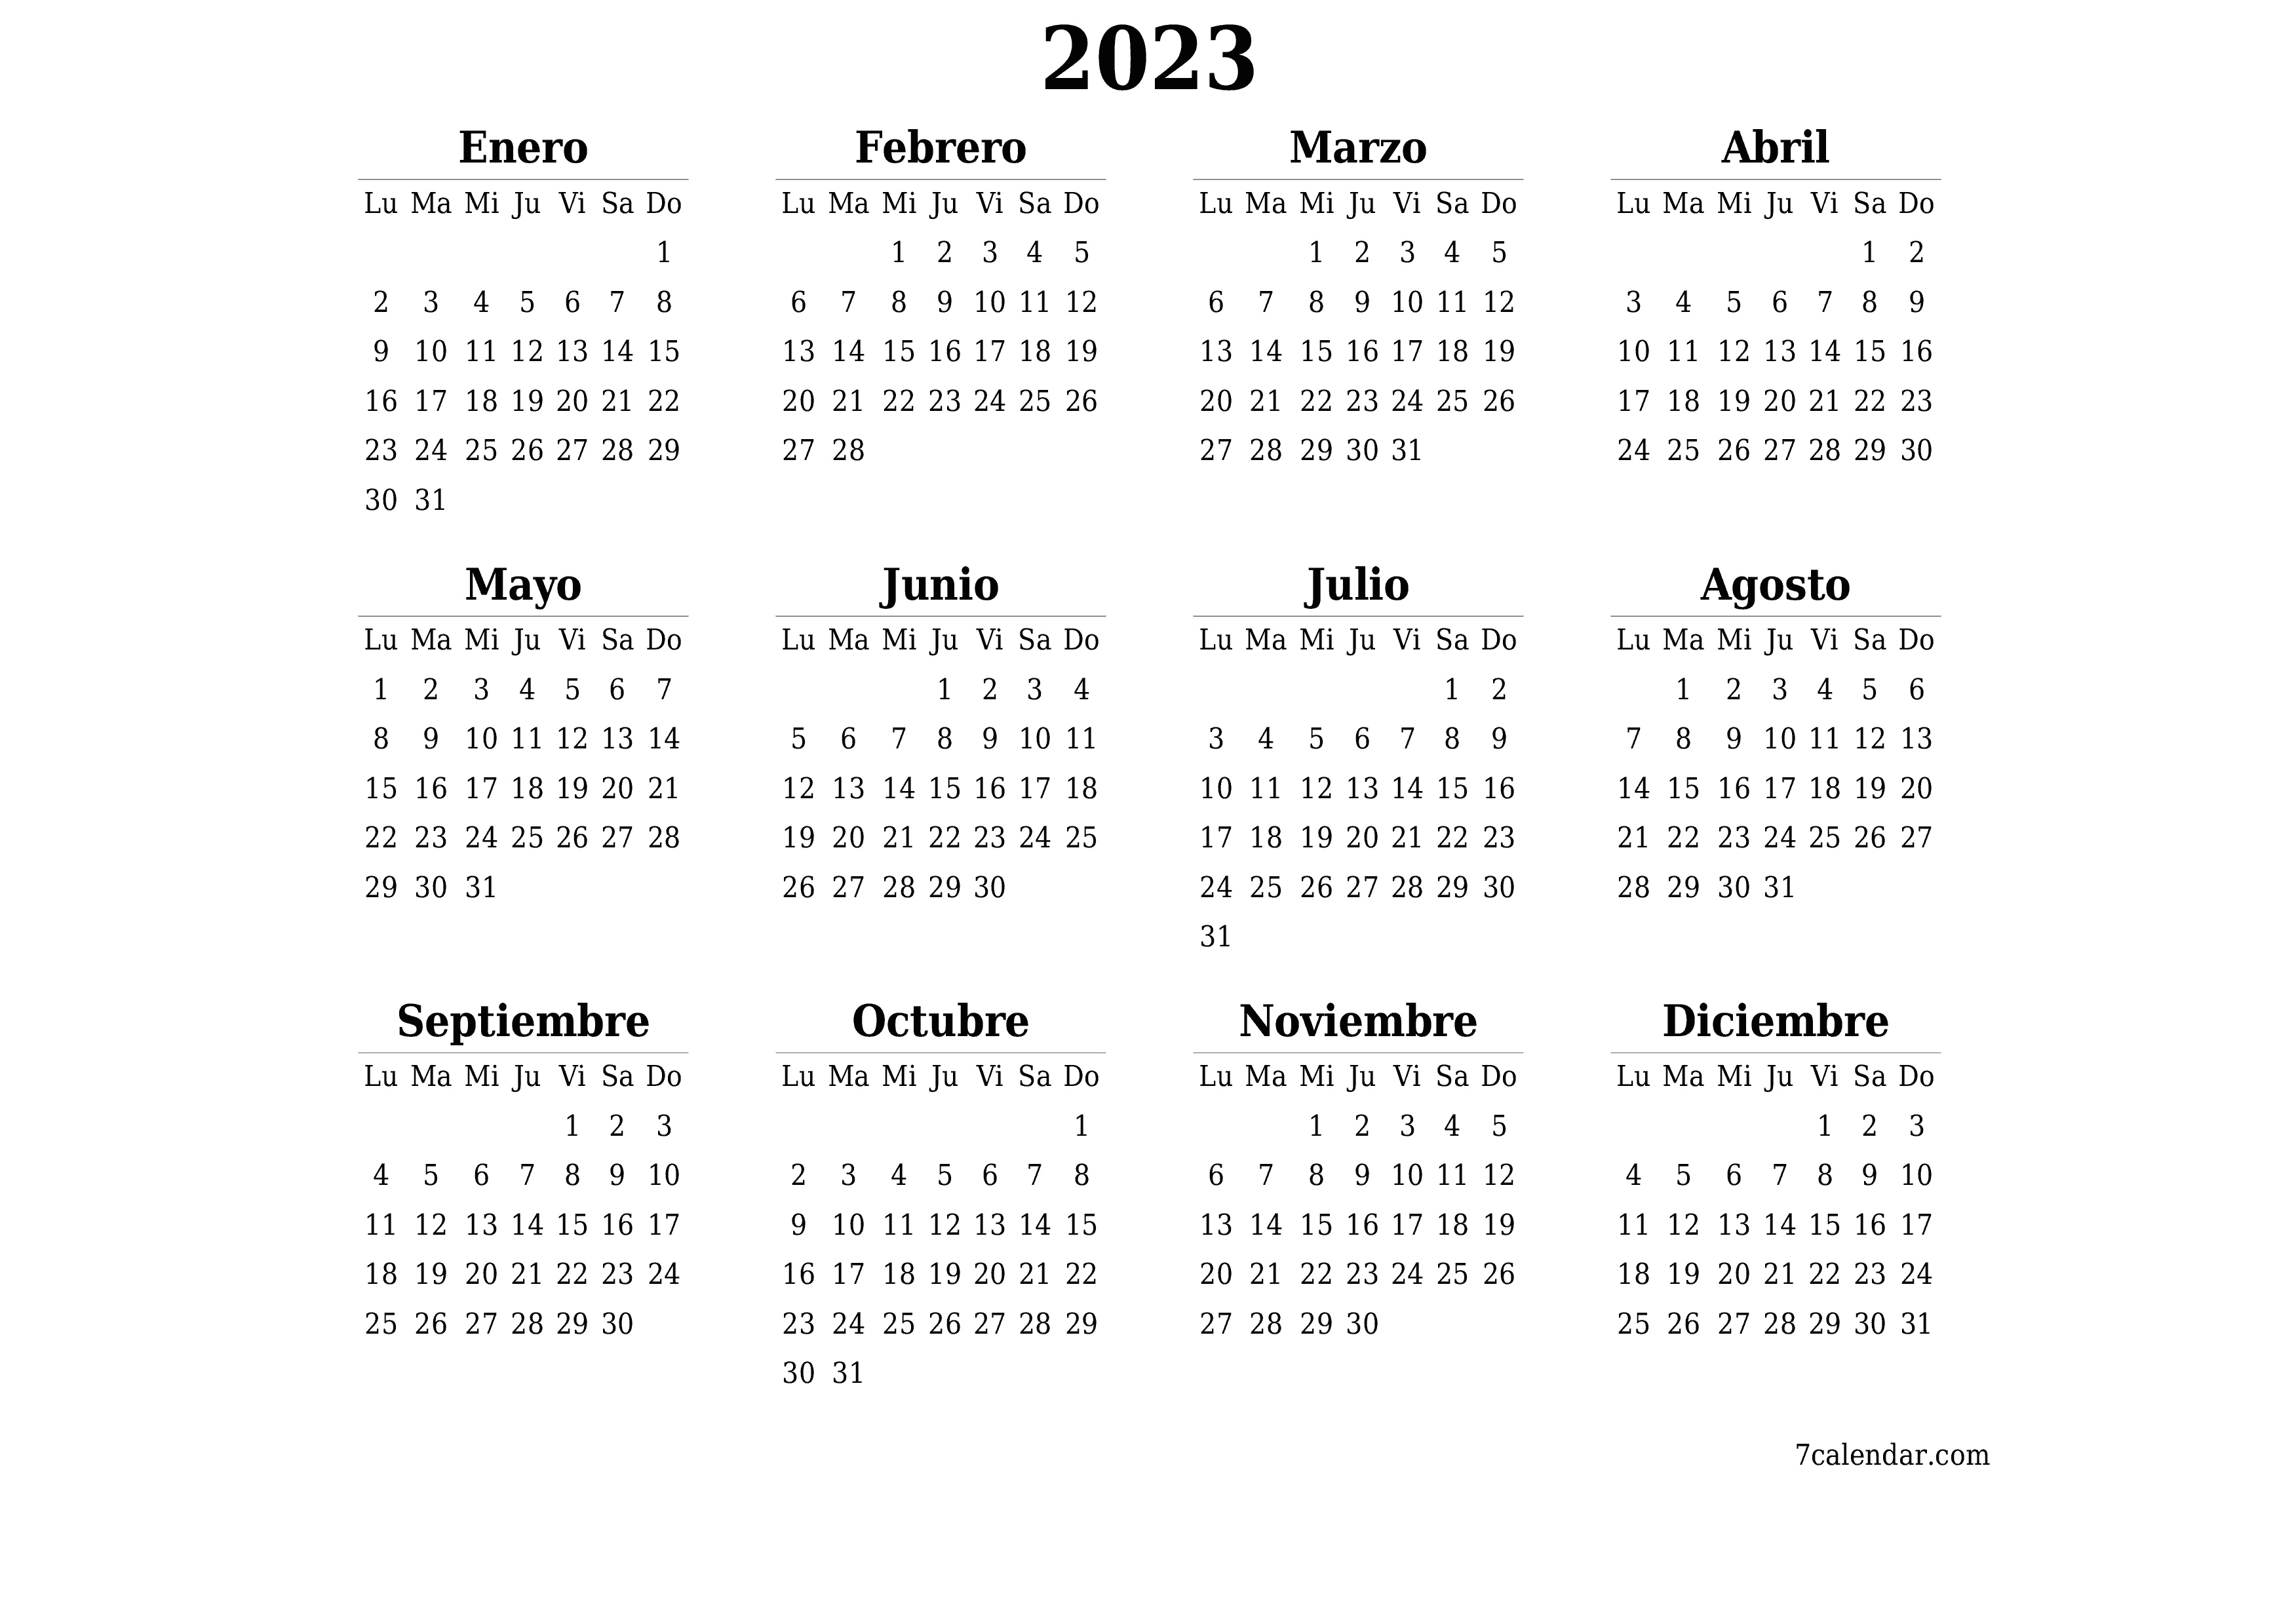 2023, año intenso